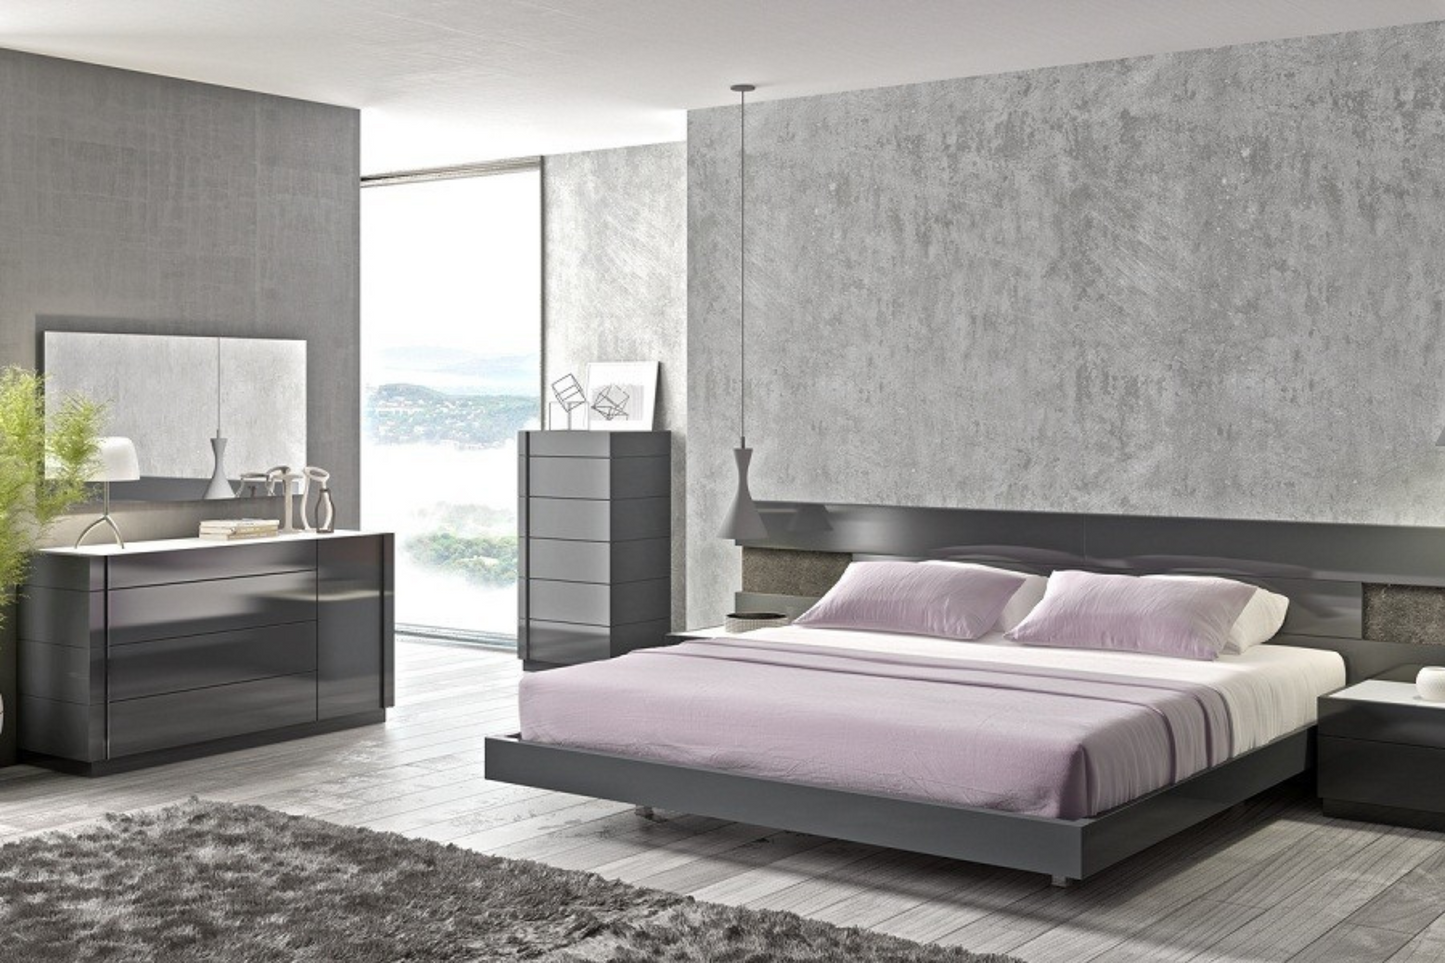 Braga Premium Bedroom Bed SKU: 178671